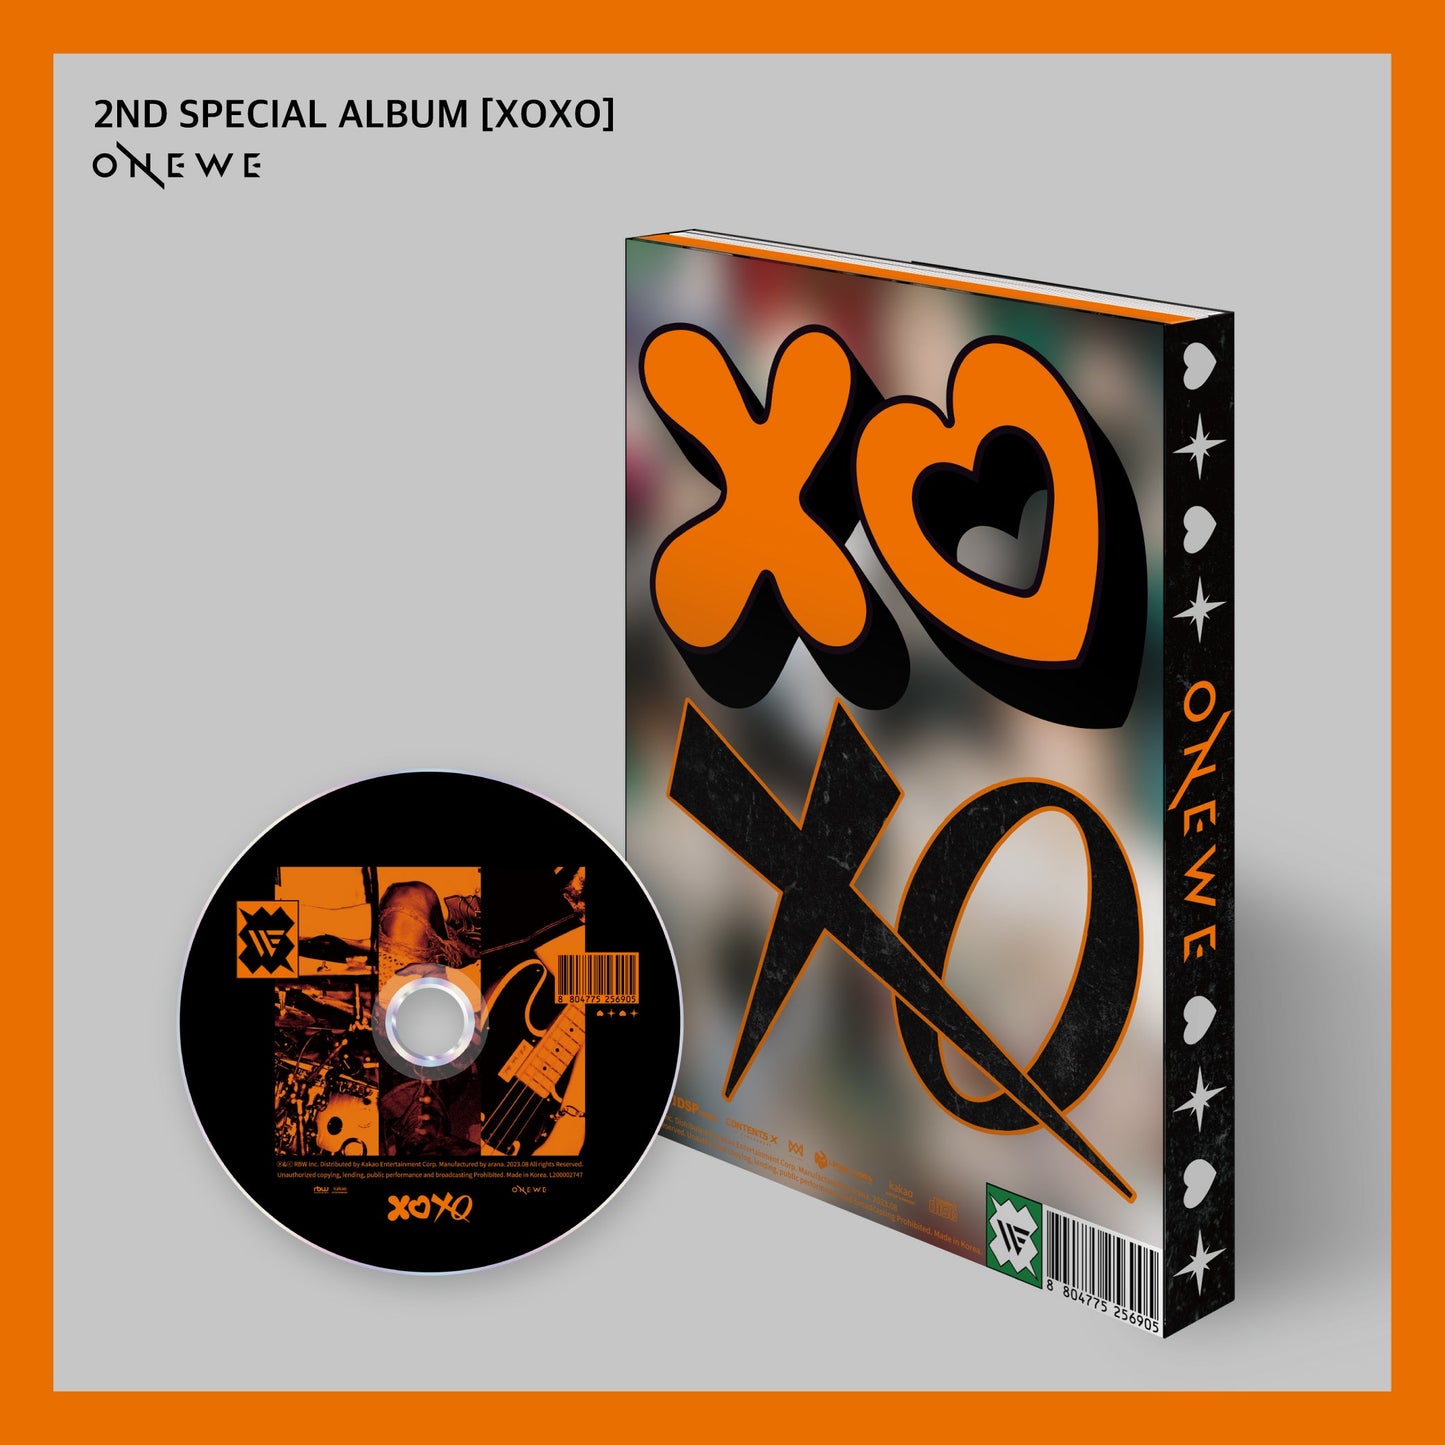 ONEWE SPECIAL ALBUM 'XOXO' COVER